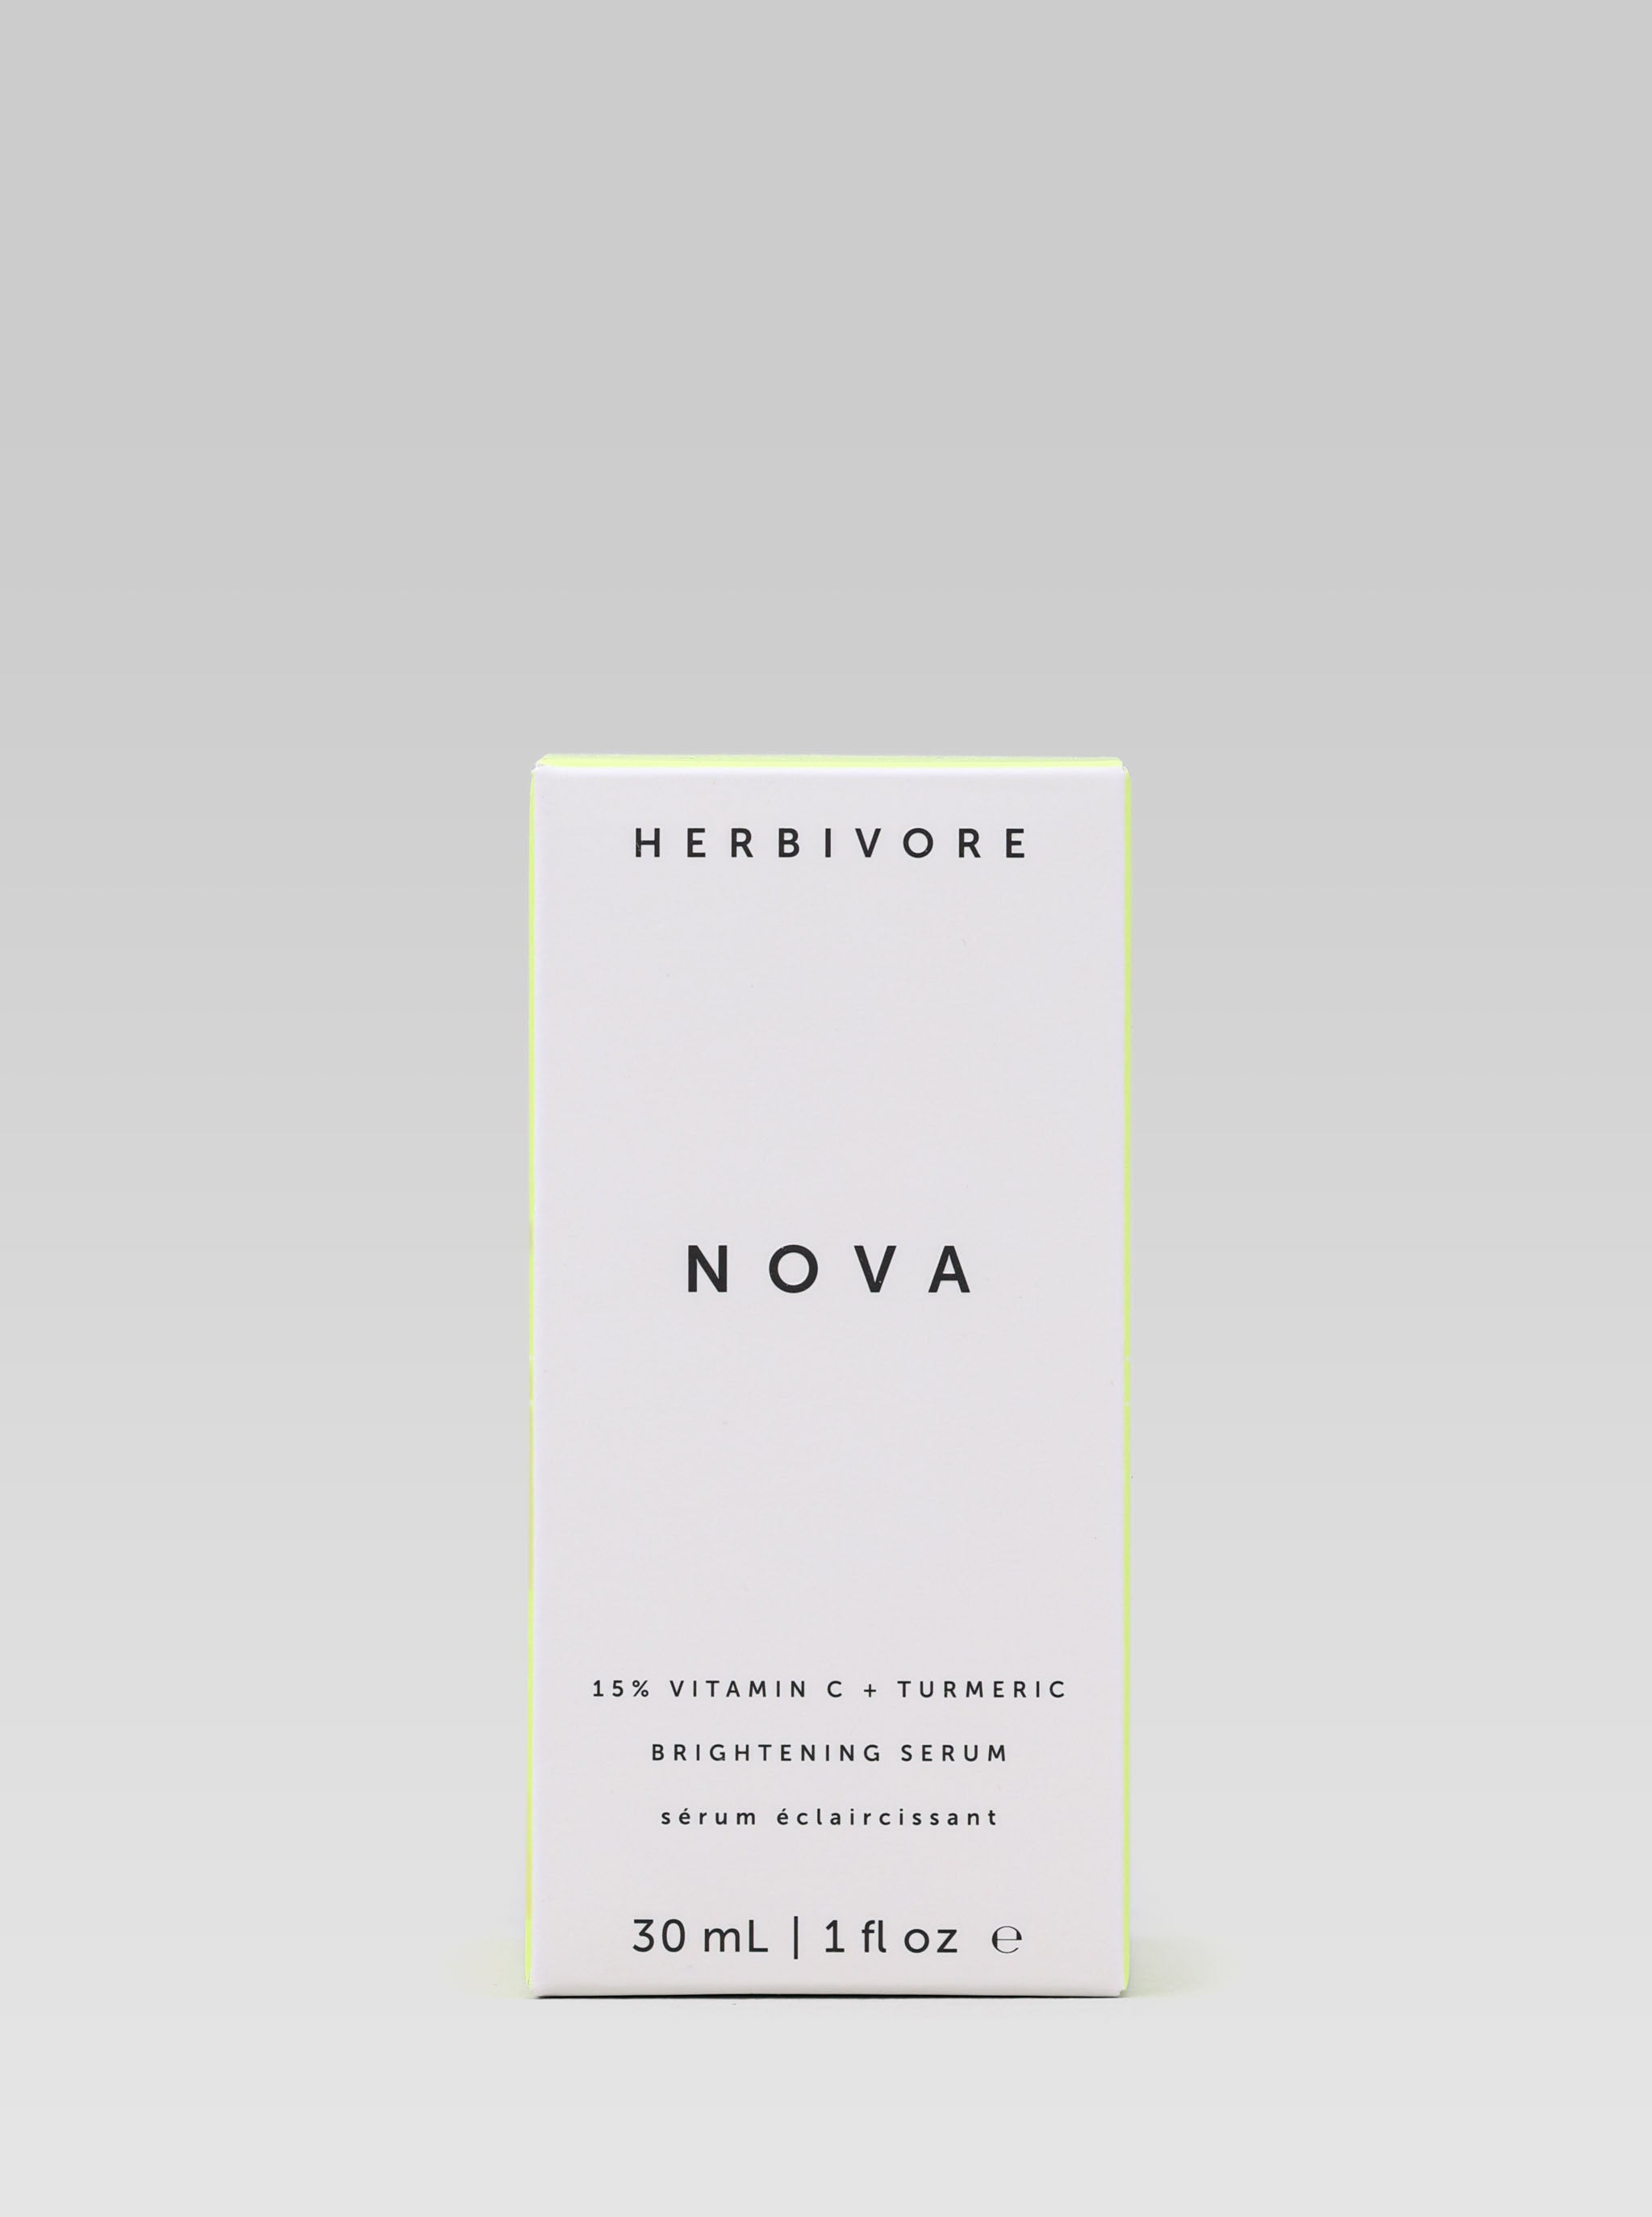 HERBIVORE BOTANICALS Nova Brightening Serum product packaging 